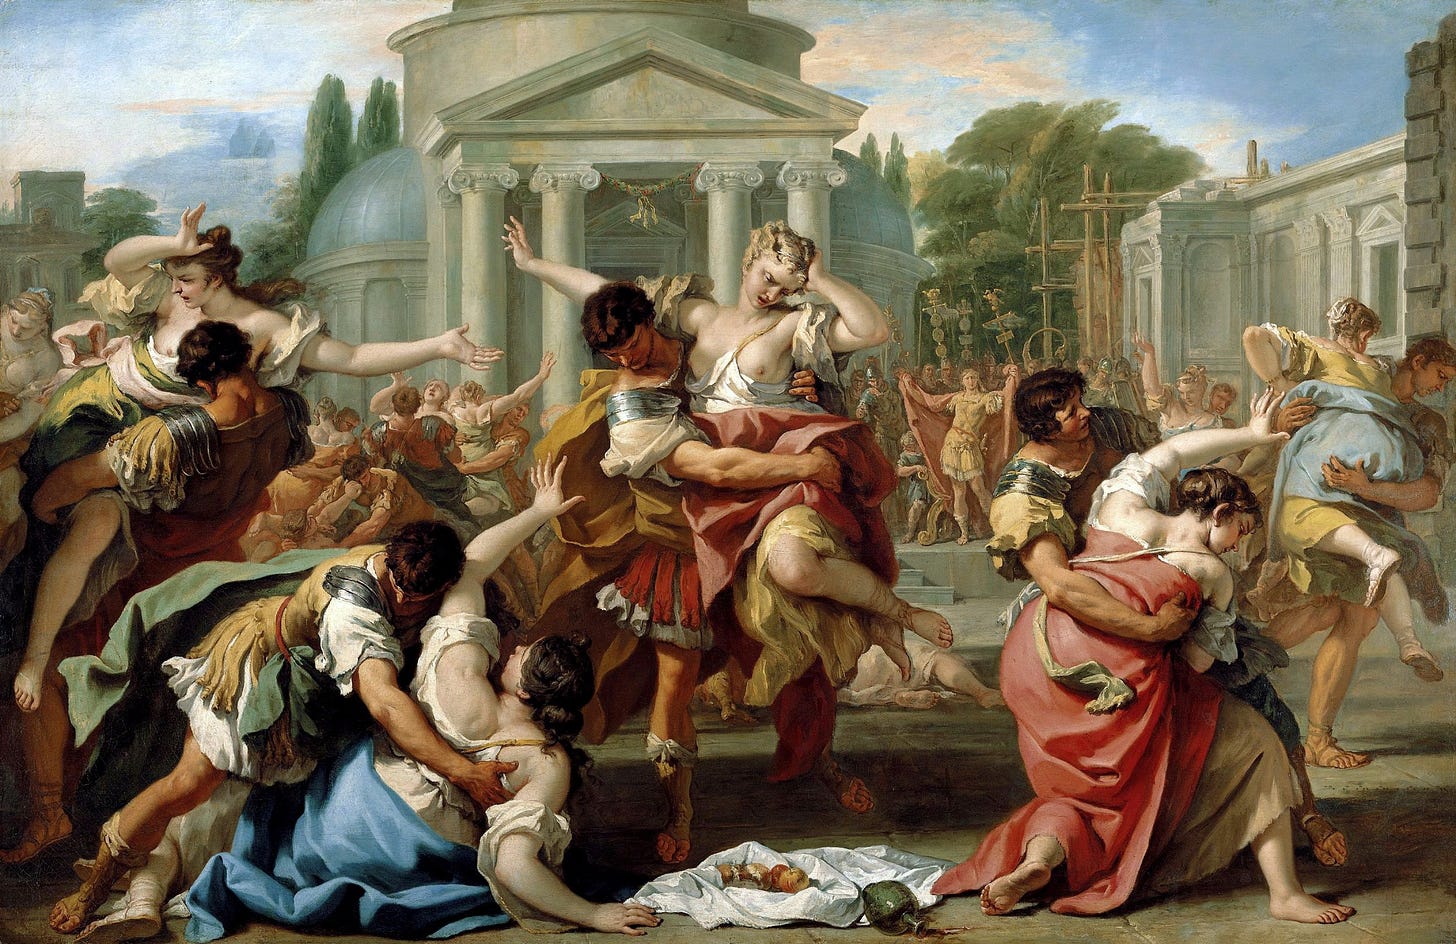 "The Rape of the Sabine Women", Sebastiano Ricci (c. 1700)